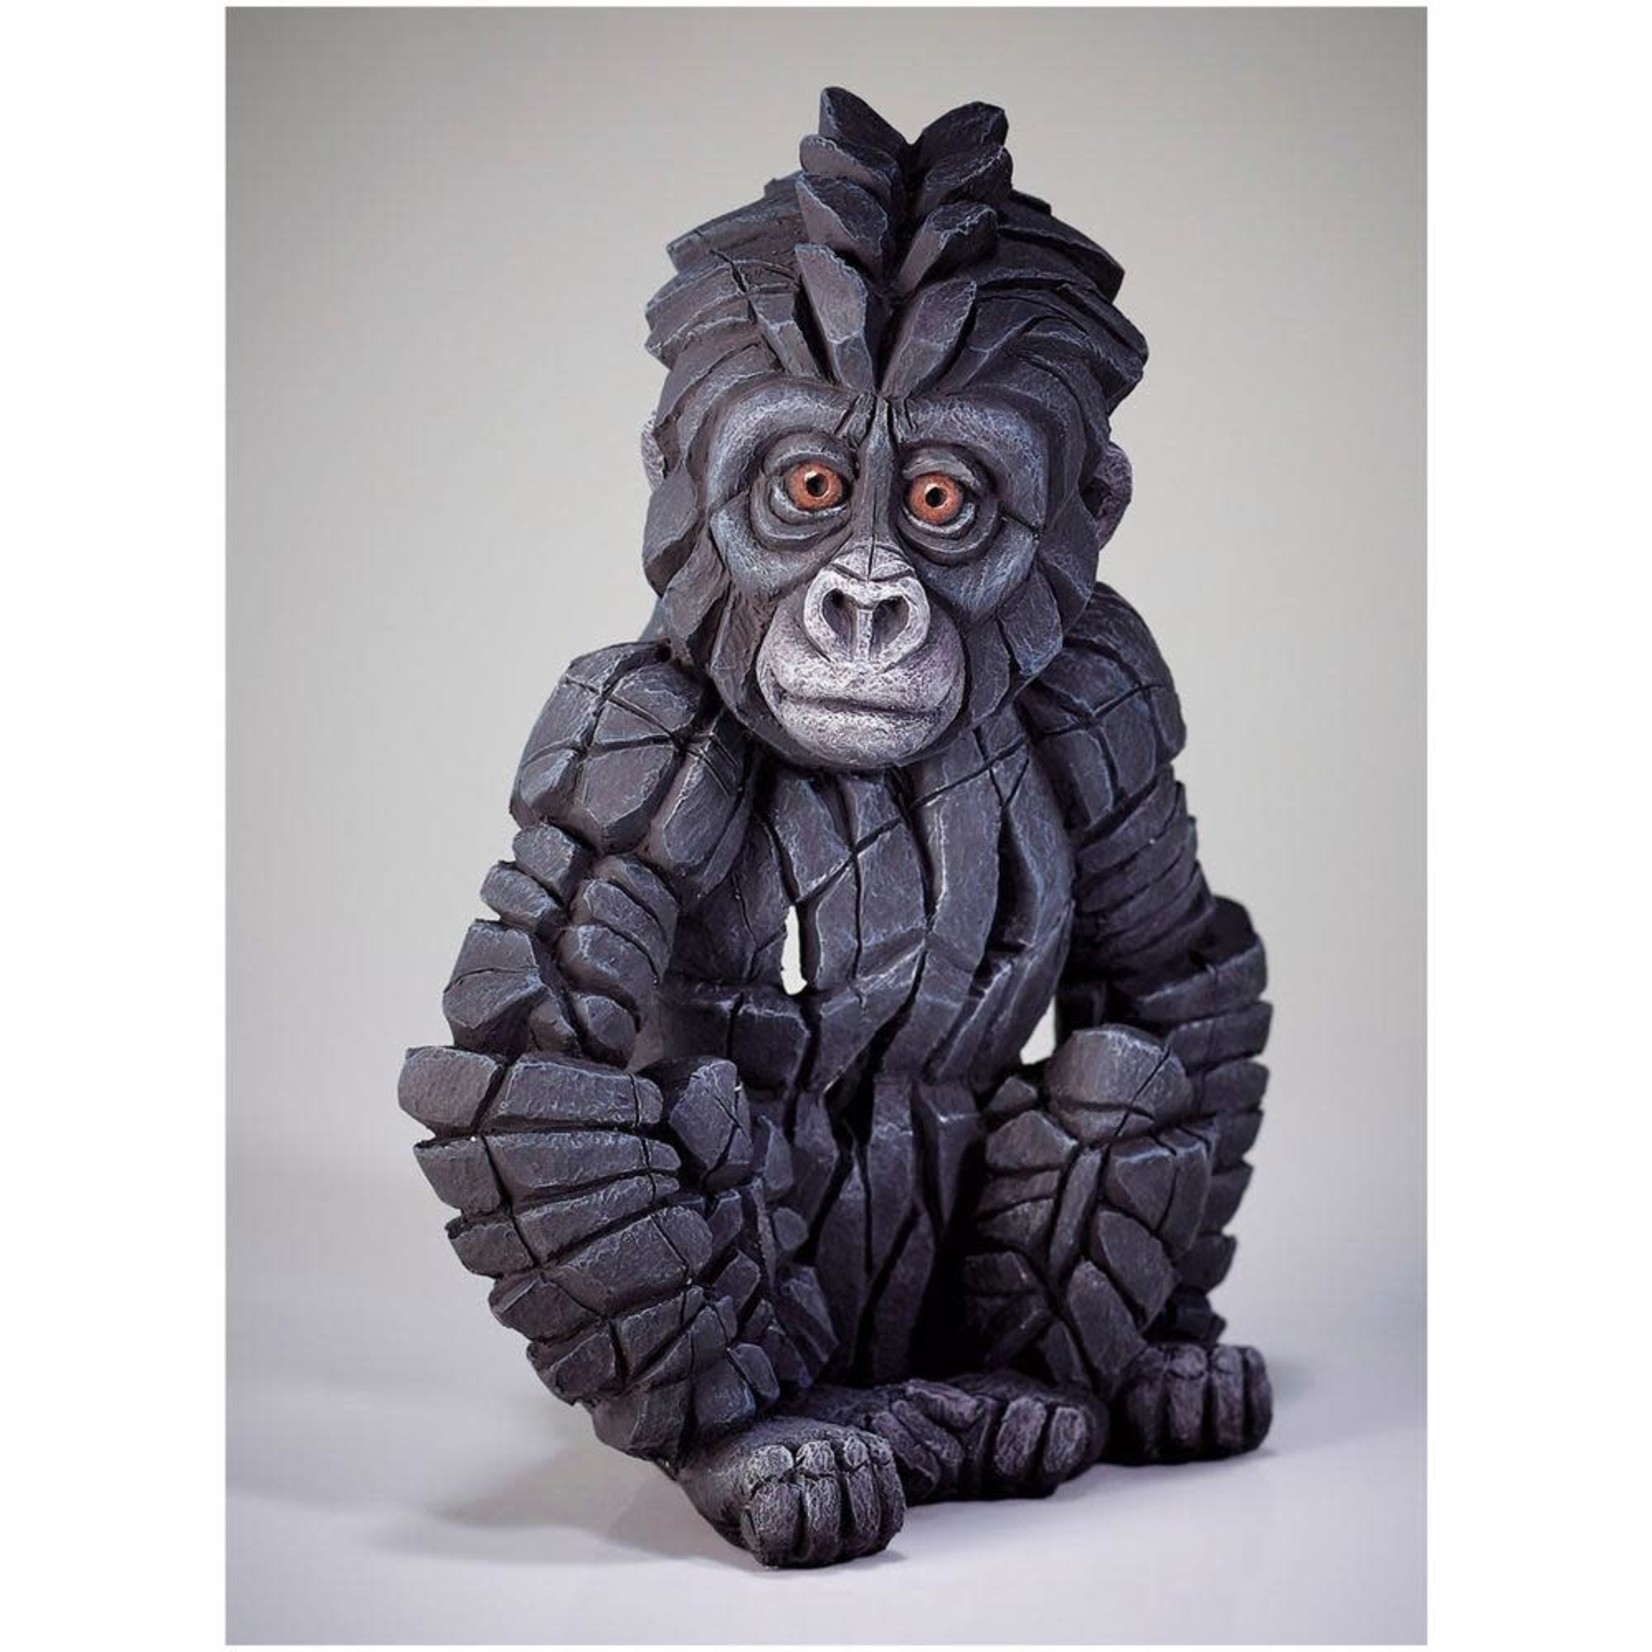 Edge Sculpture Baby Gorilla Figure